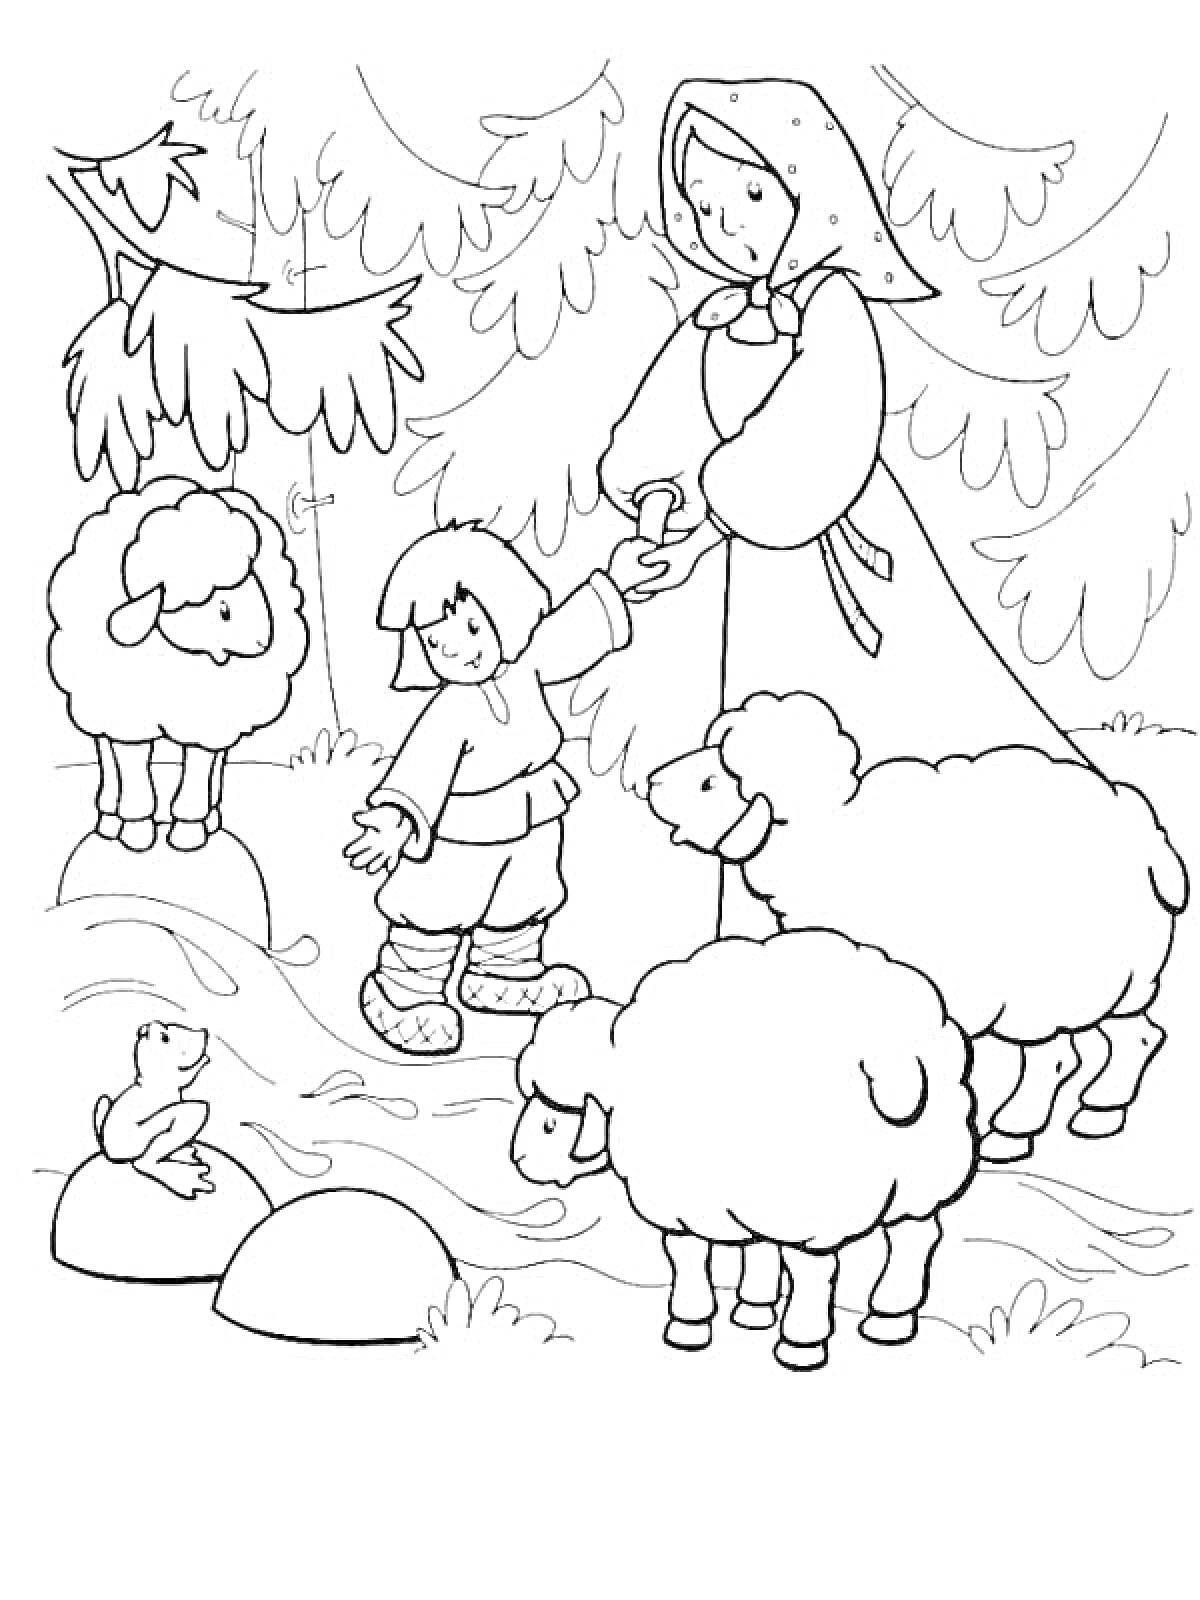 Сестрица Аленушка и братец Иванушка, держащиеся за руки возле ручья в лесу, овечки, лягушка